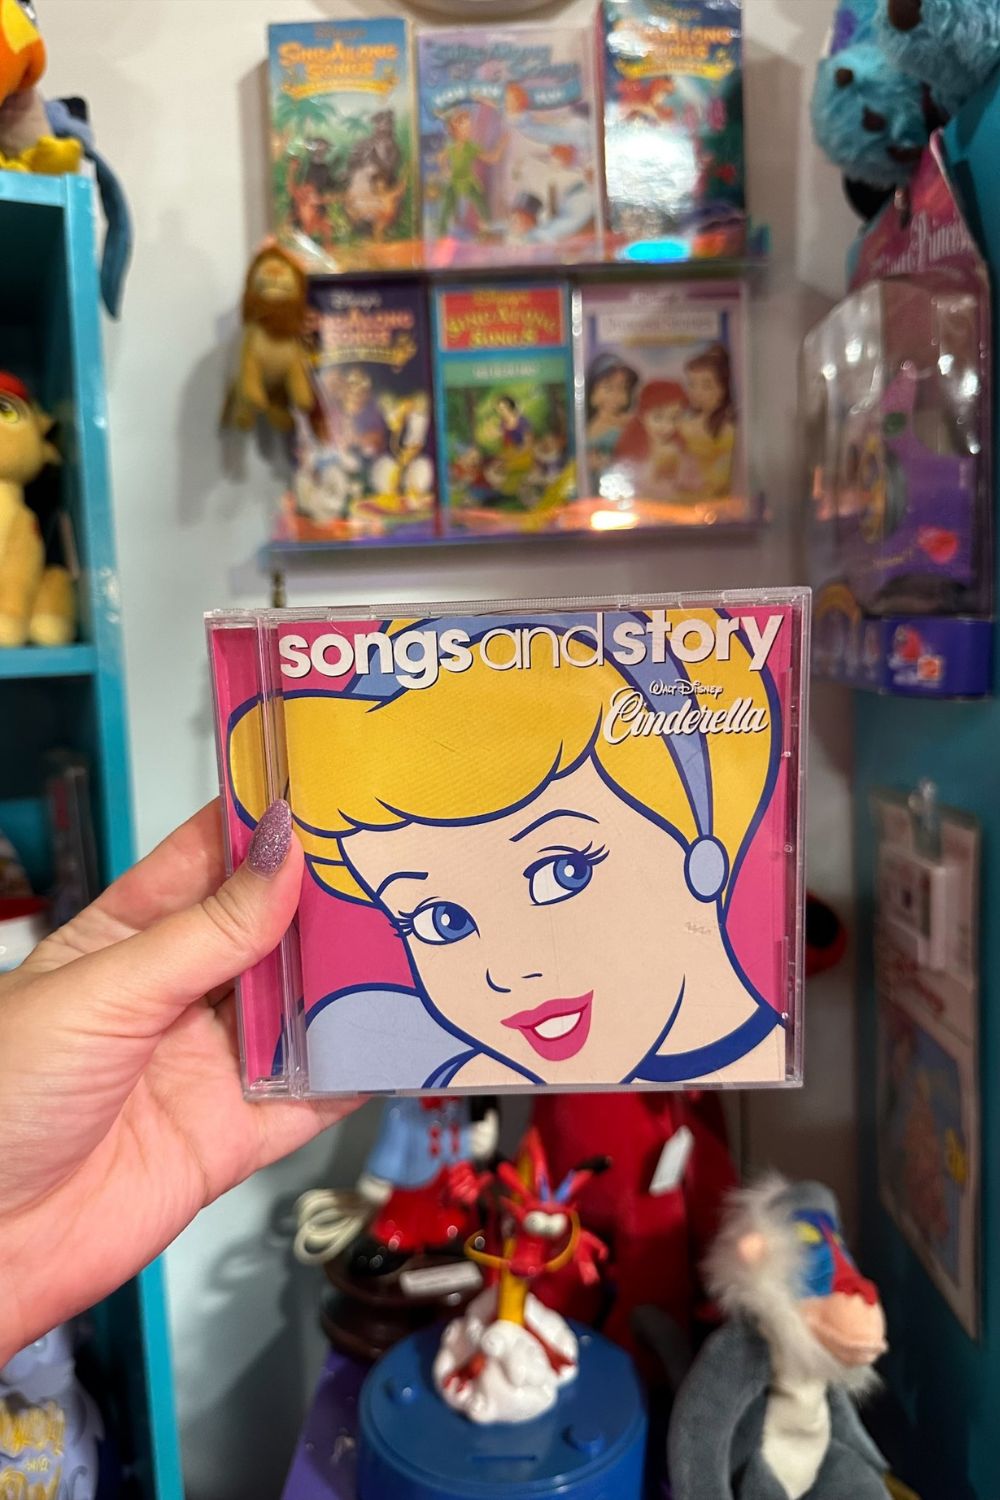 SONGS & STORY CINDERELLA CD*